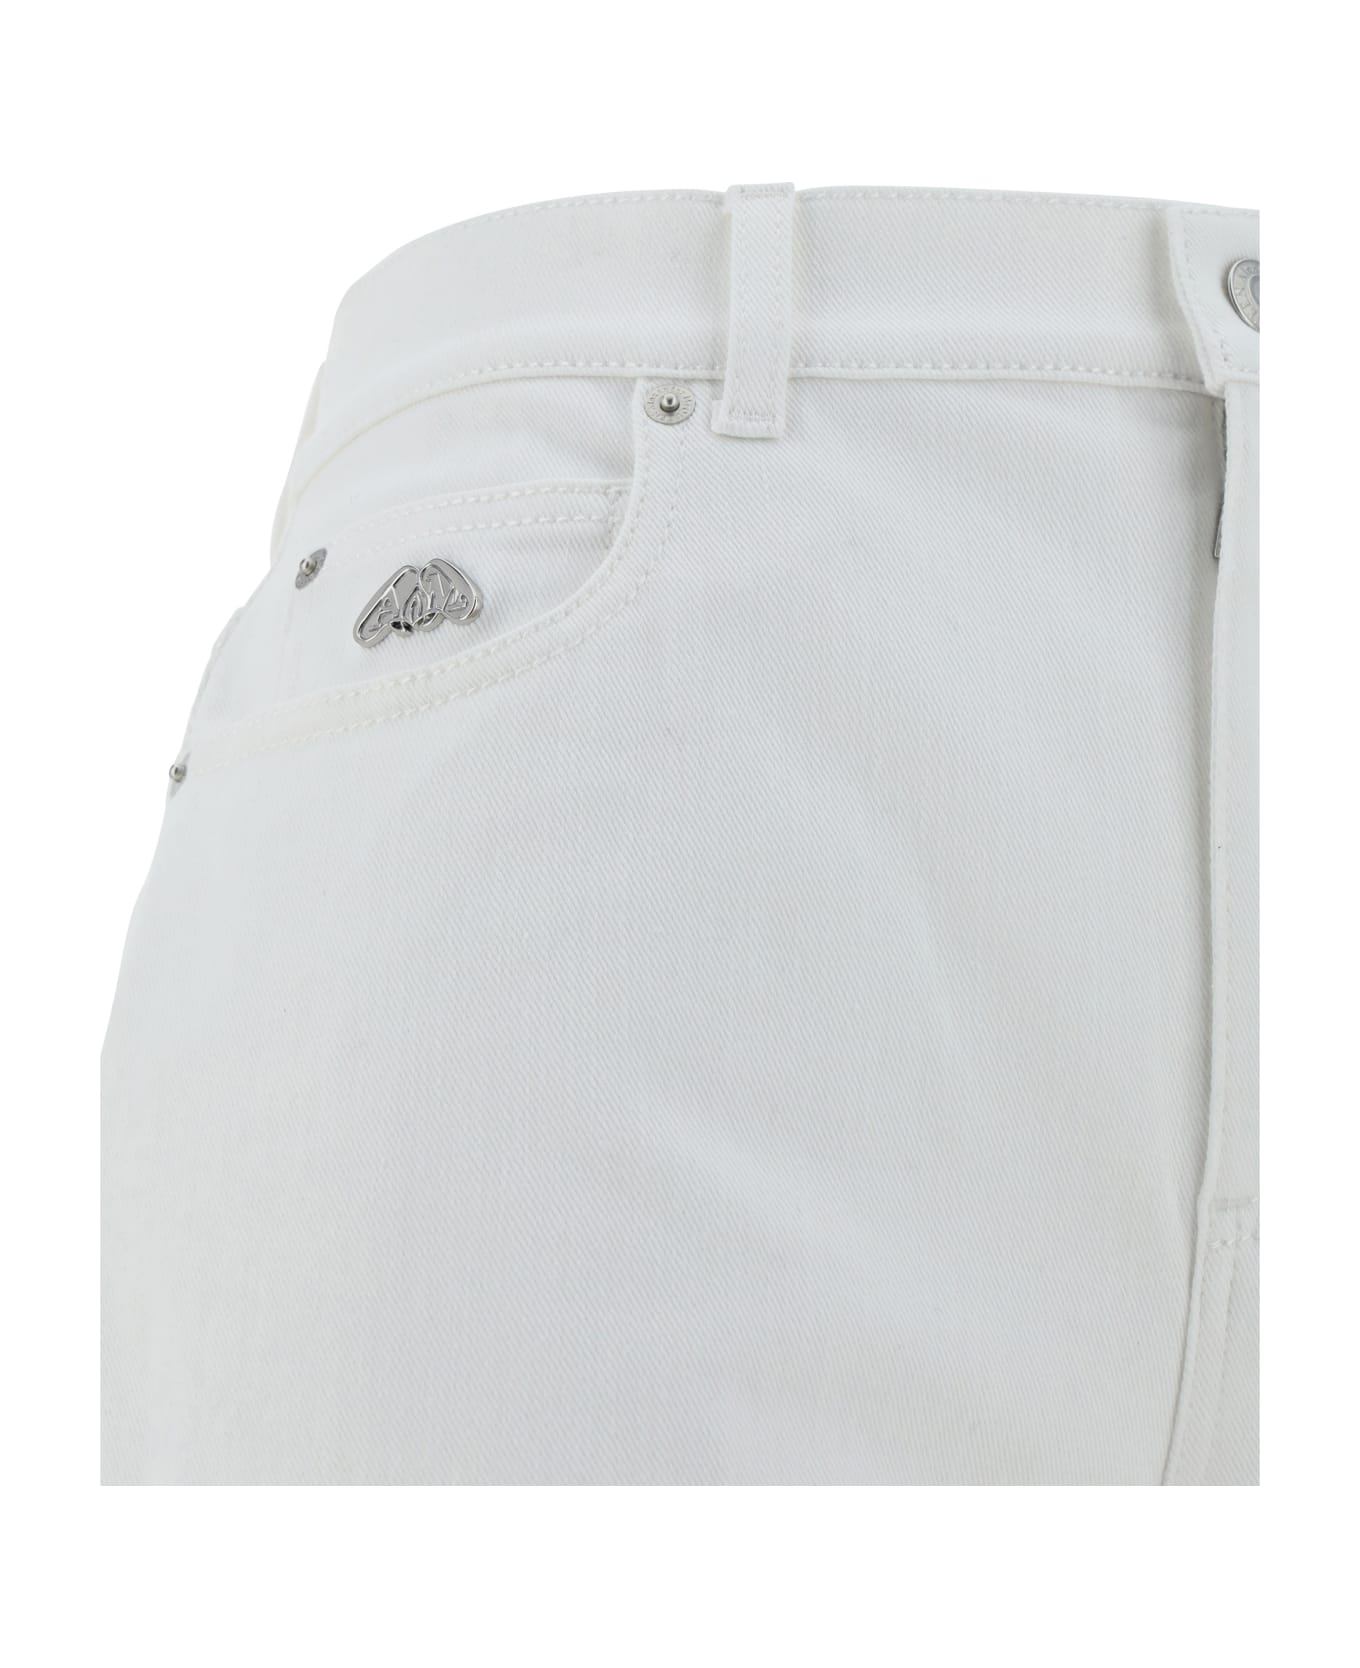 Alexander McQueen Pants - Optical White